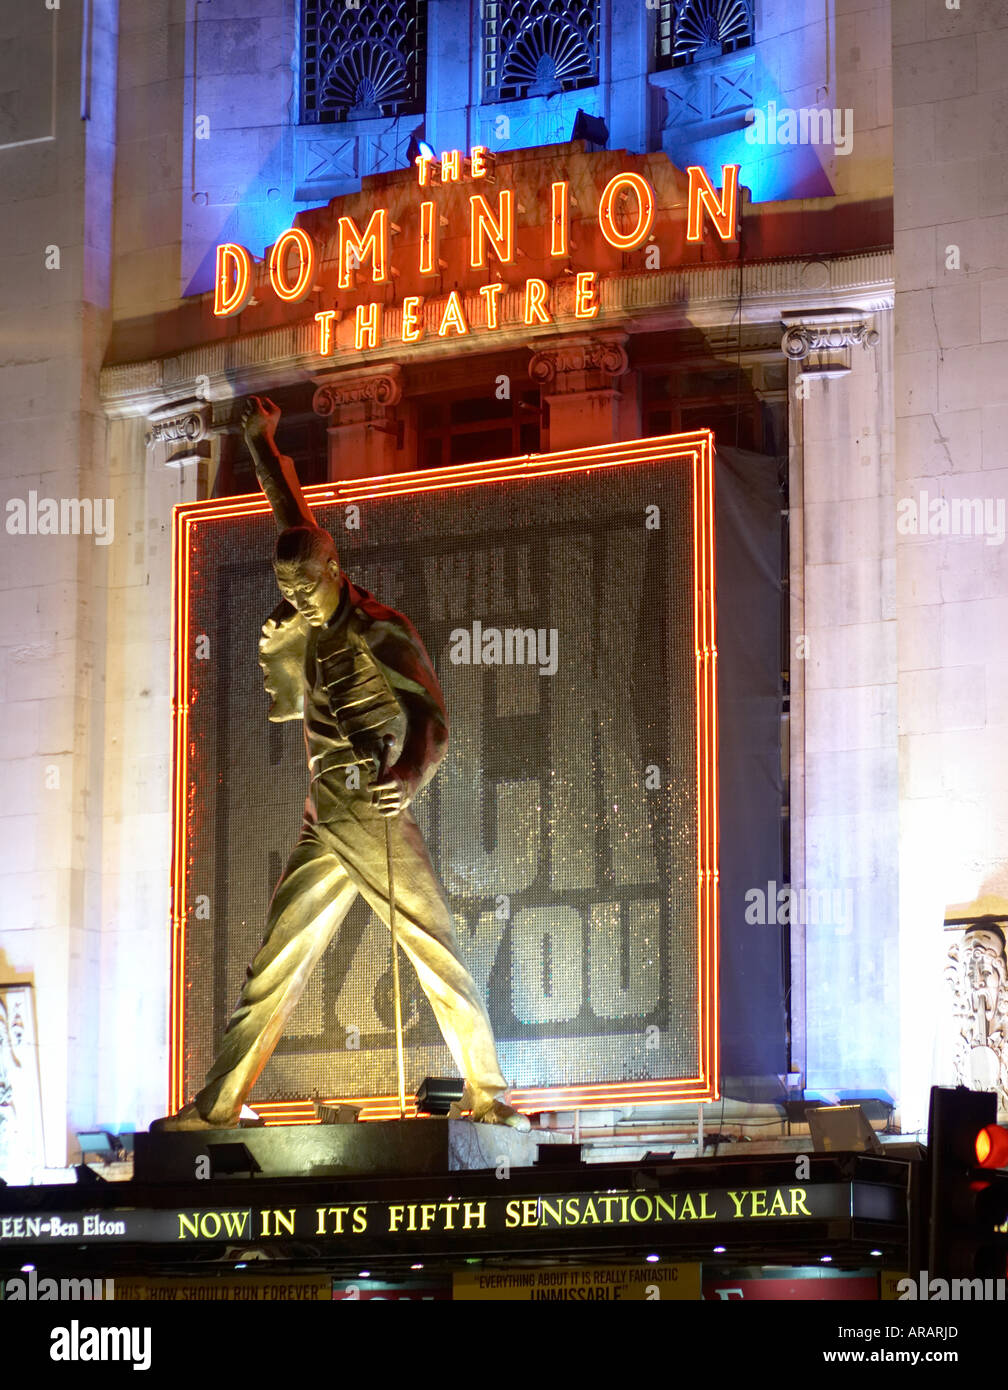 Dominion Theatre in London UK Stockfoto